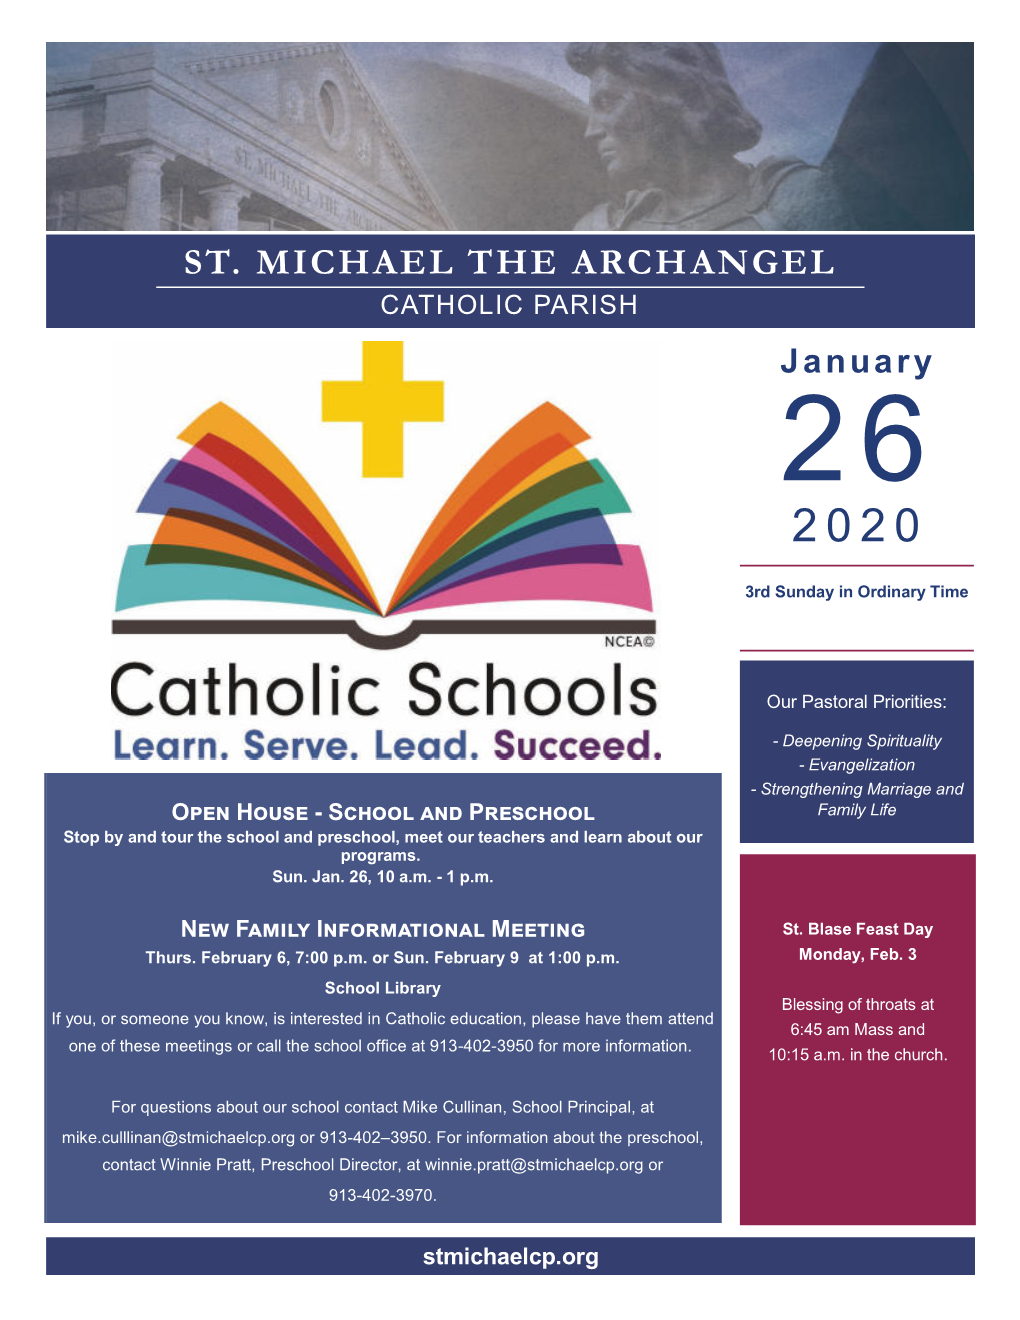 ST. MICHAEL the ARCHANGEL CATHOLIC PARISH January